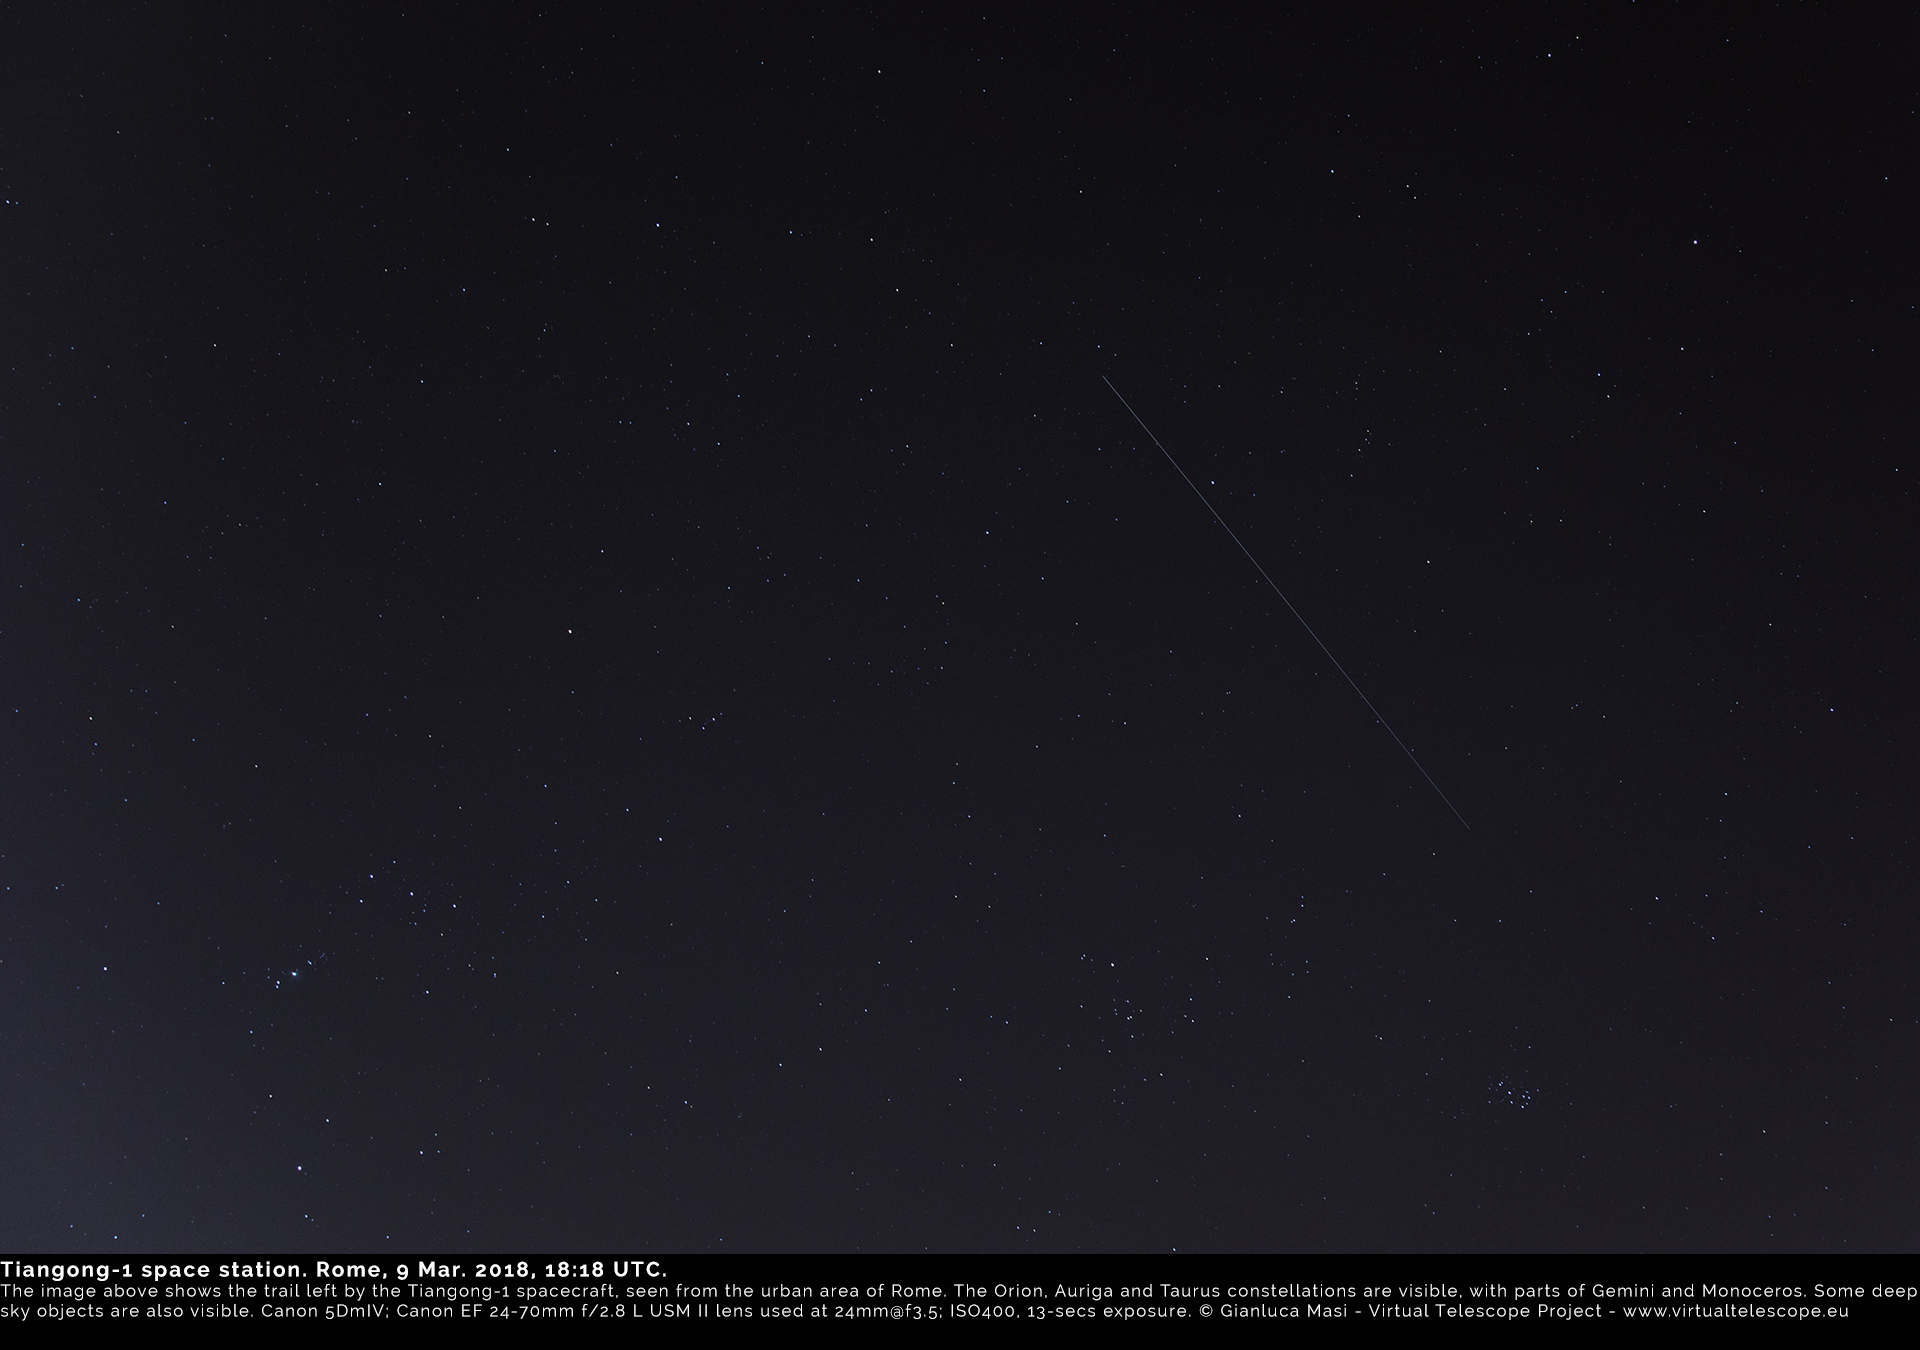 Tiangong-1: Rome, Italy, 9 Mar. 2018, 18:18 UTC